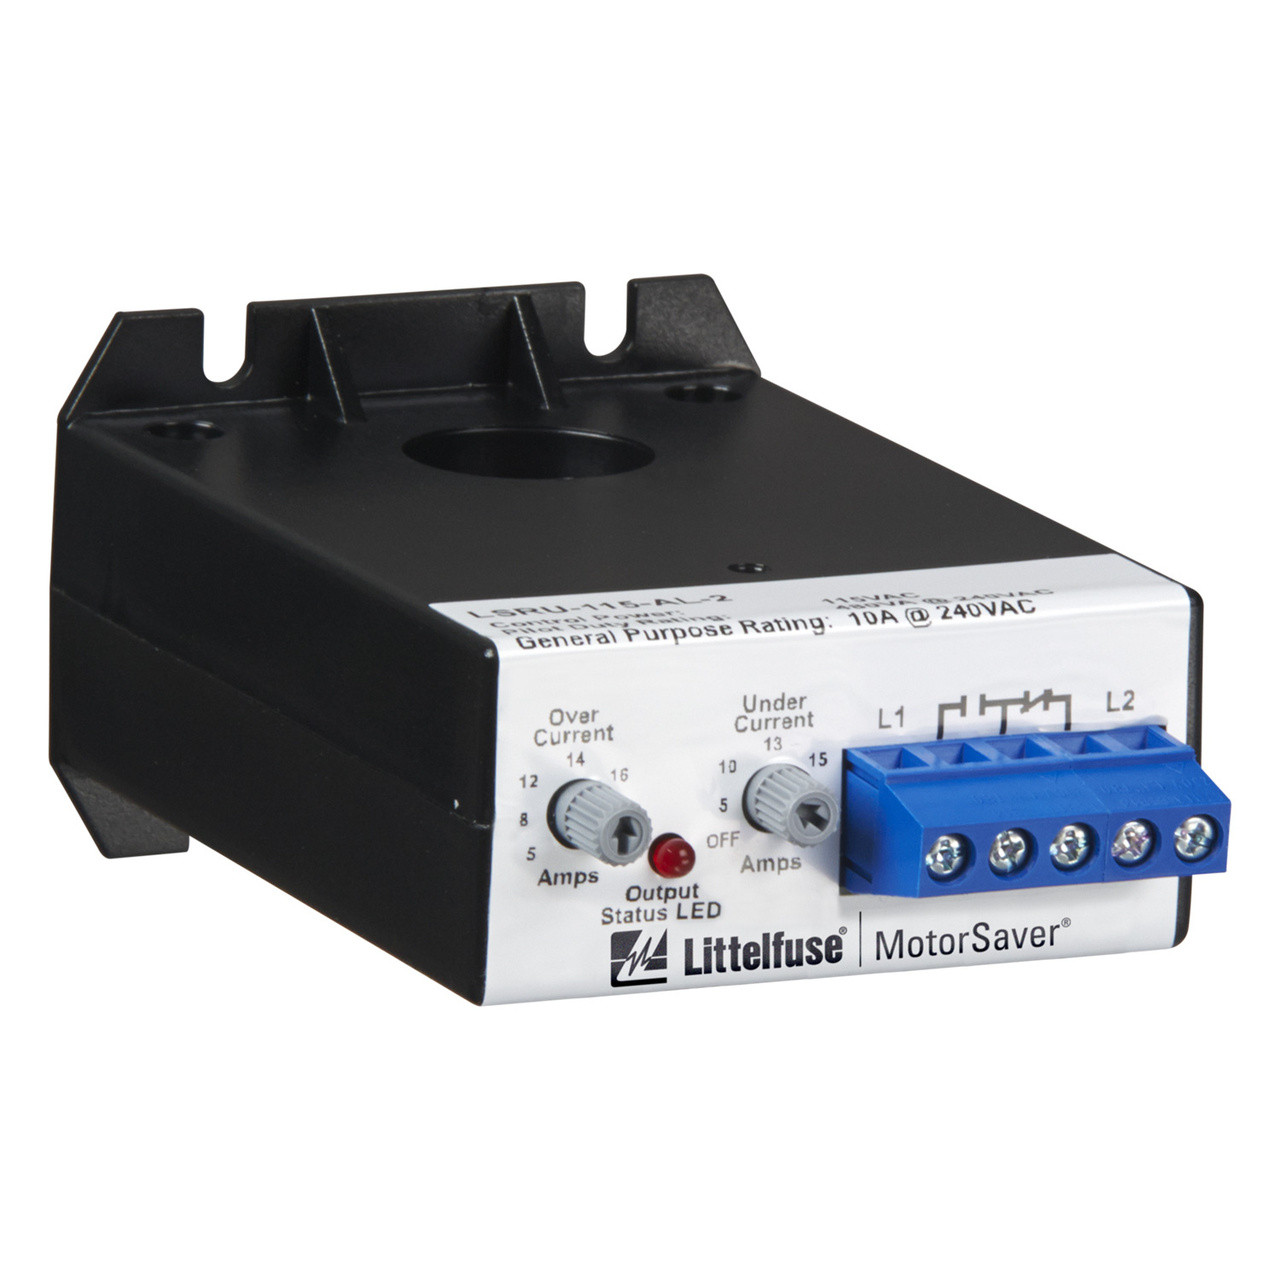 Littelfuse-Symcom LSRU-115-AL 1.5 Current Monitor Relays